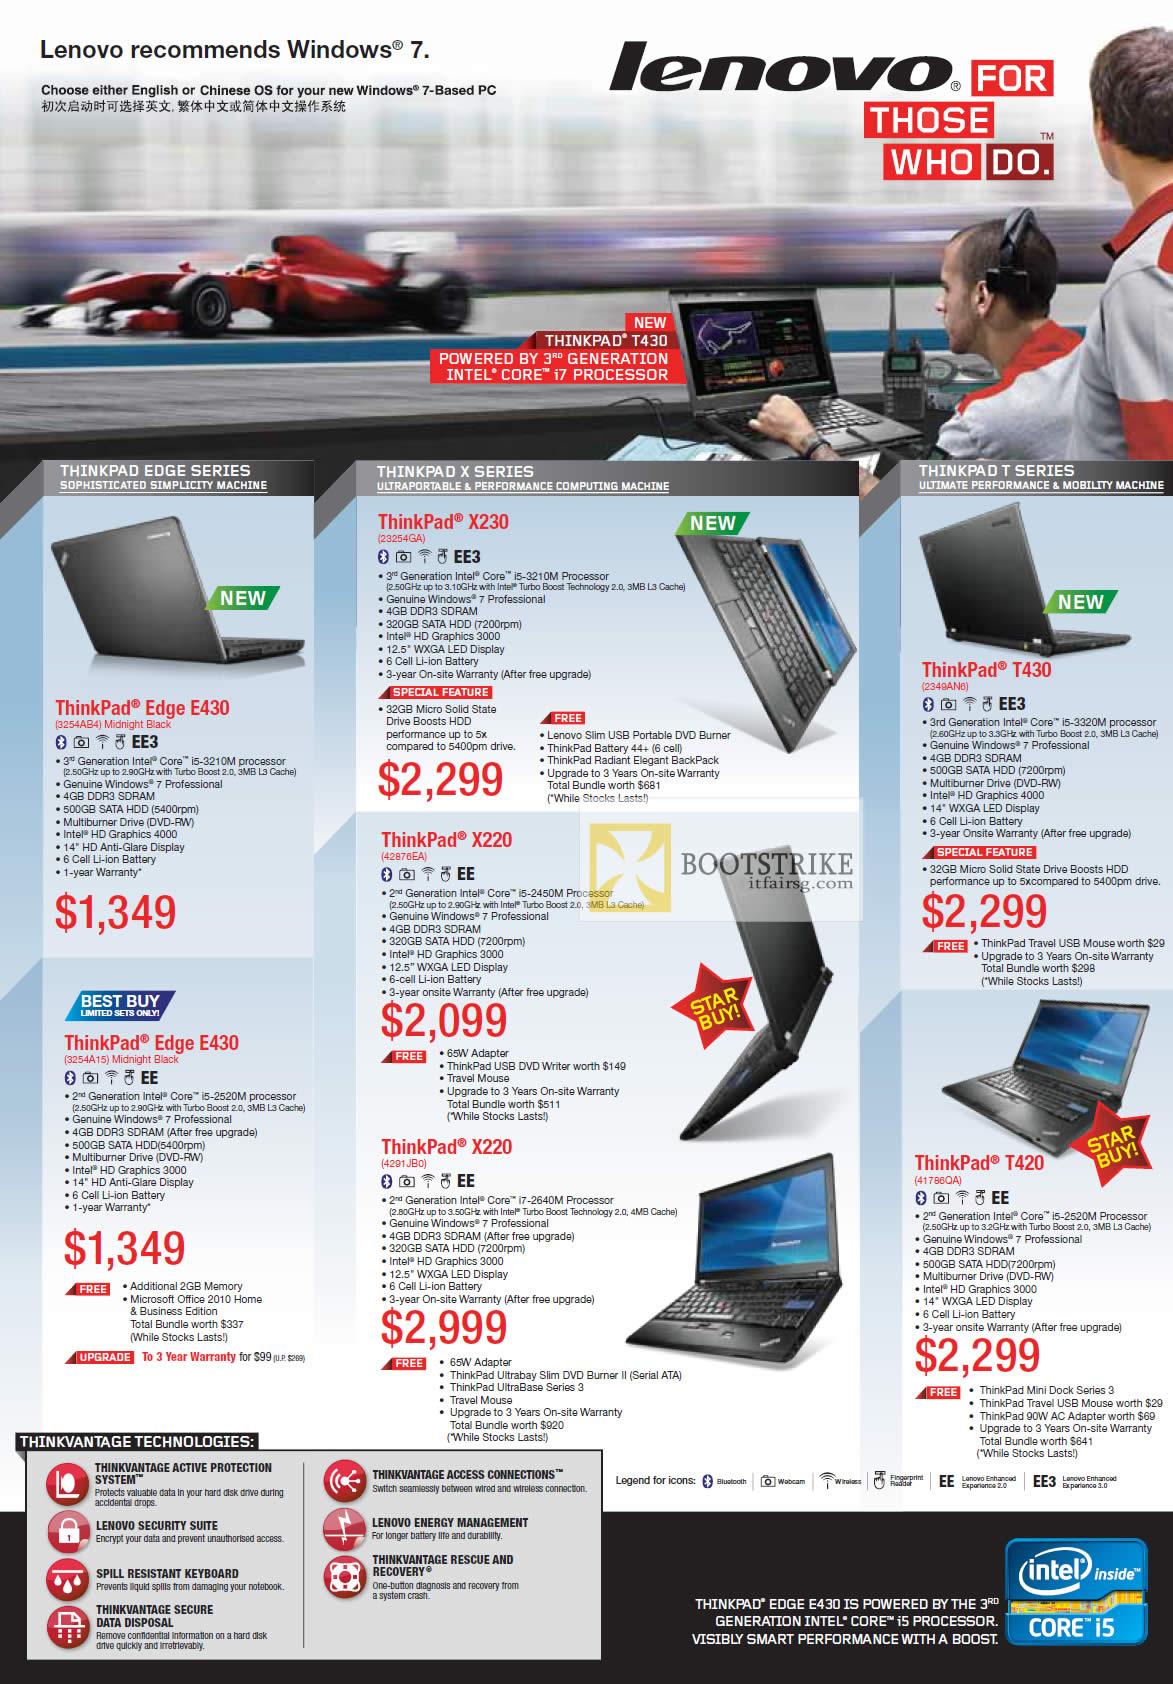 PC SHOW 2012 price list image brochure of Lenovo Notebooks ThinkPad Edge E430, X230, X220, T430, T420